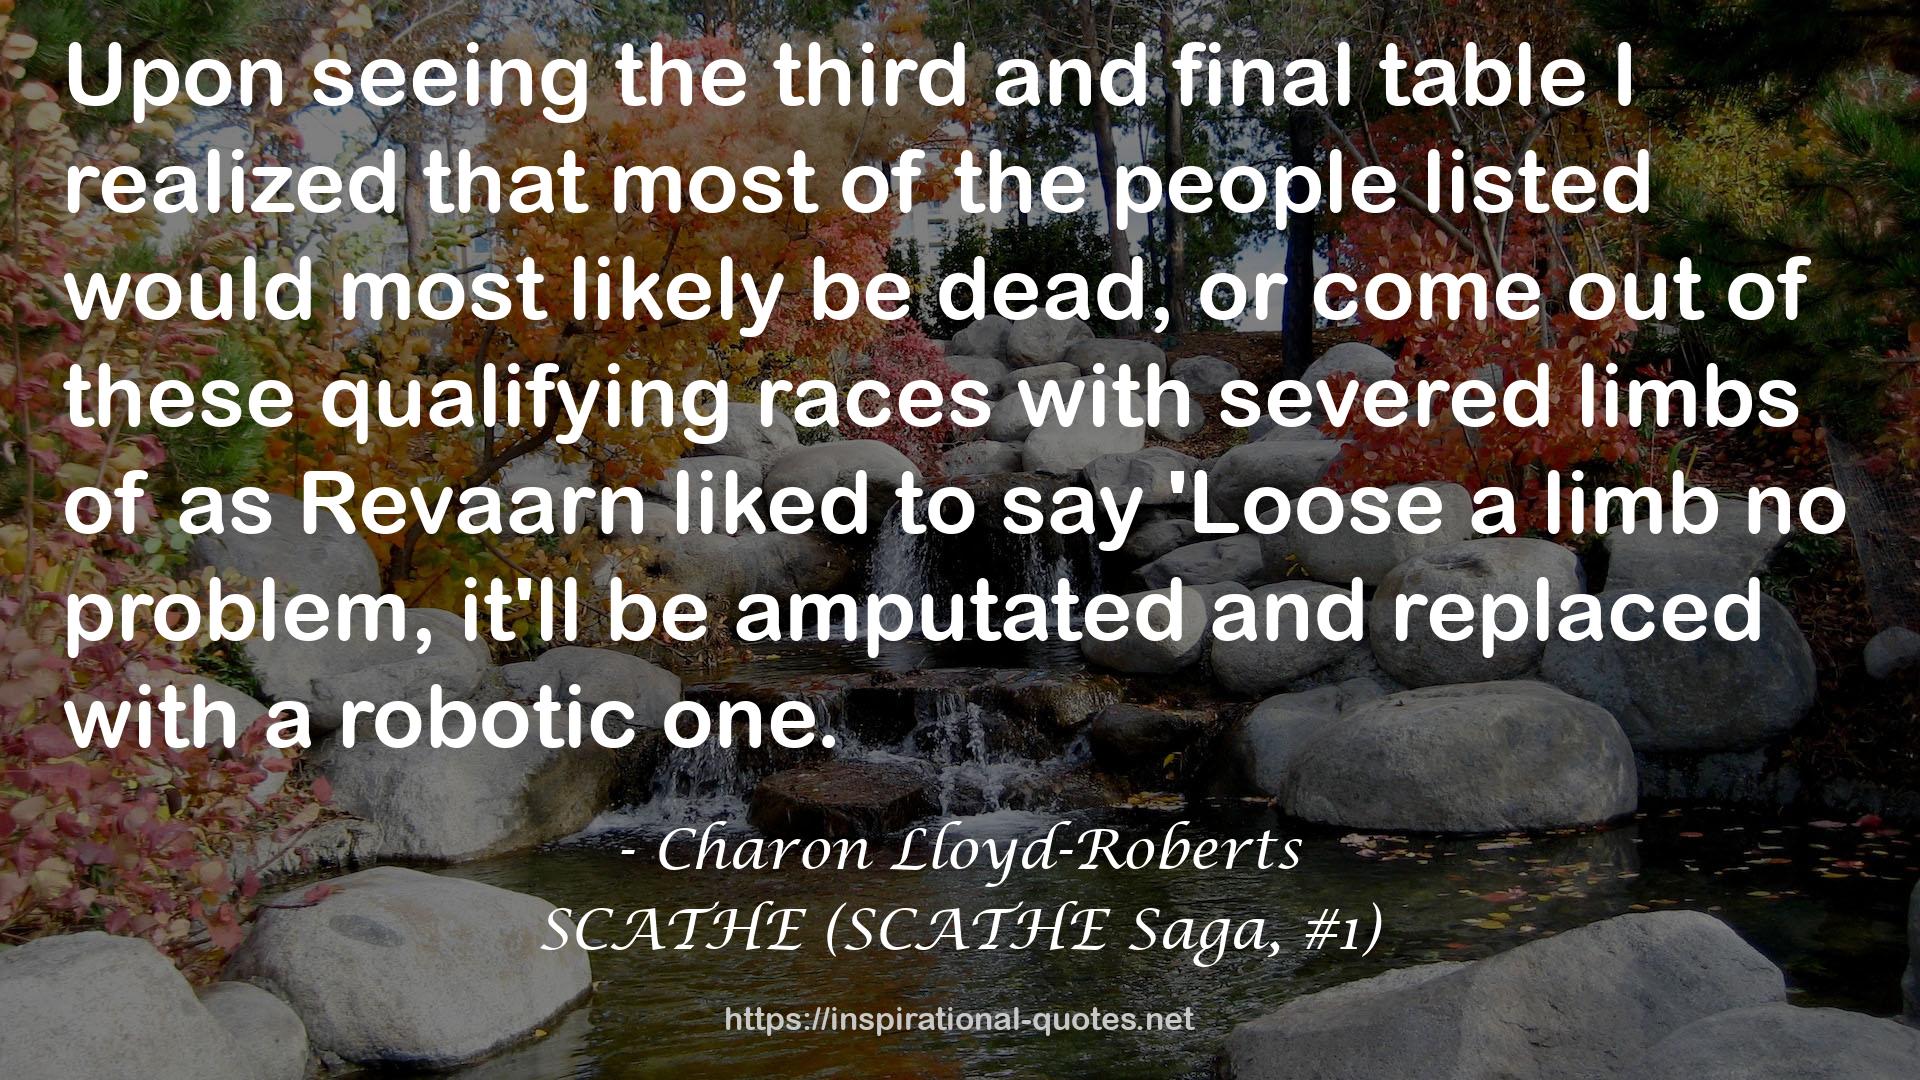 Charon Lloyd-Roberts QUOTES